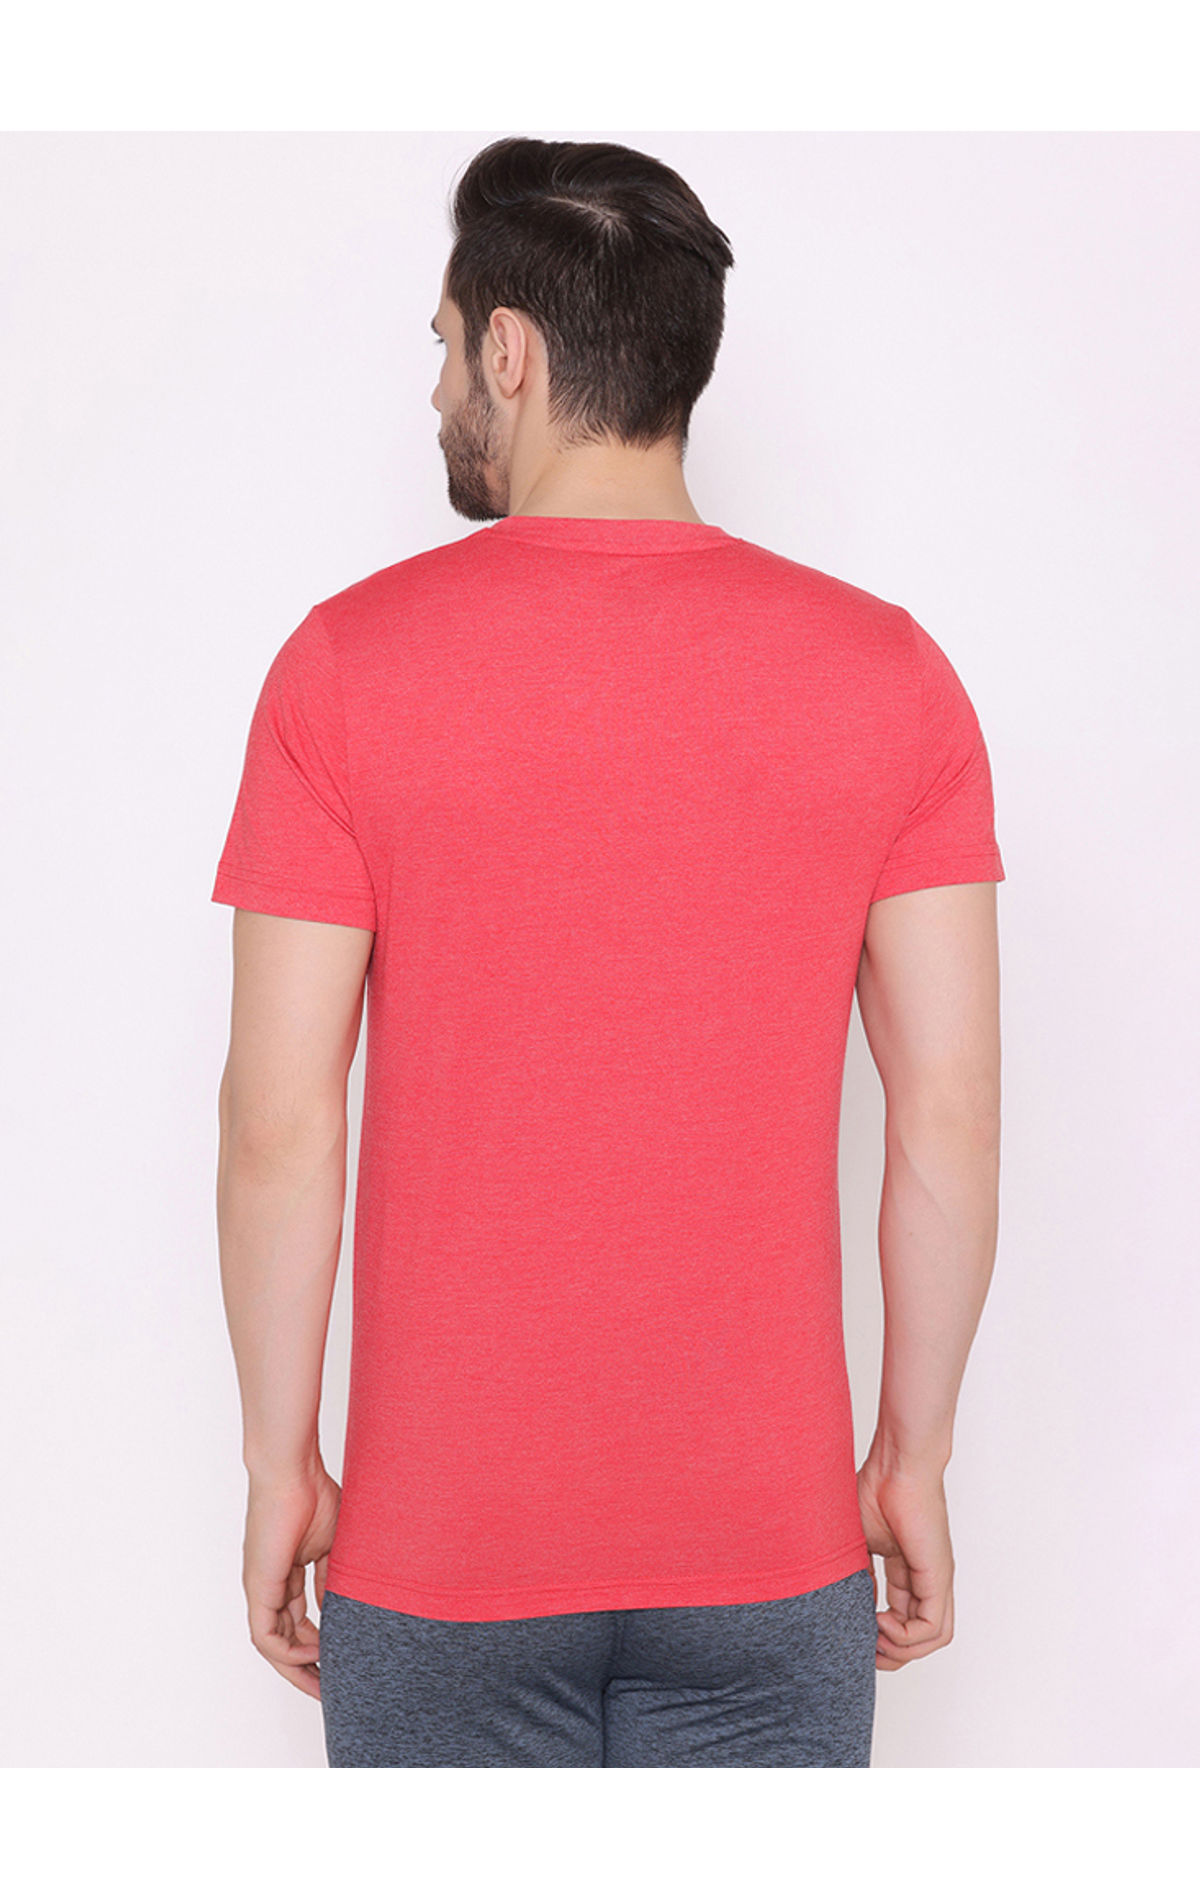 Bodyactive Modern Fit V Neck Half Sleeve T-Shirt for Men-TS60-NAT